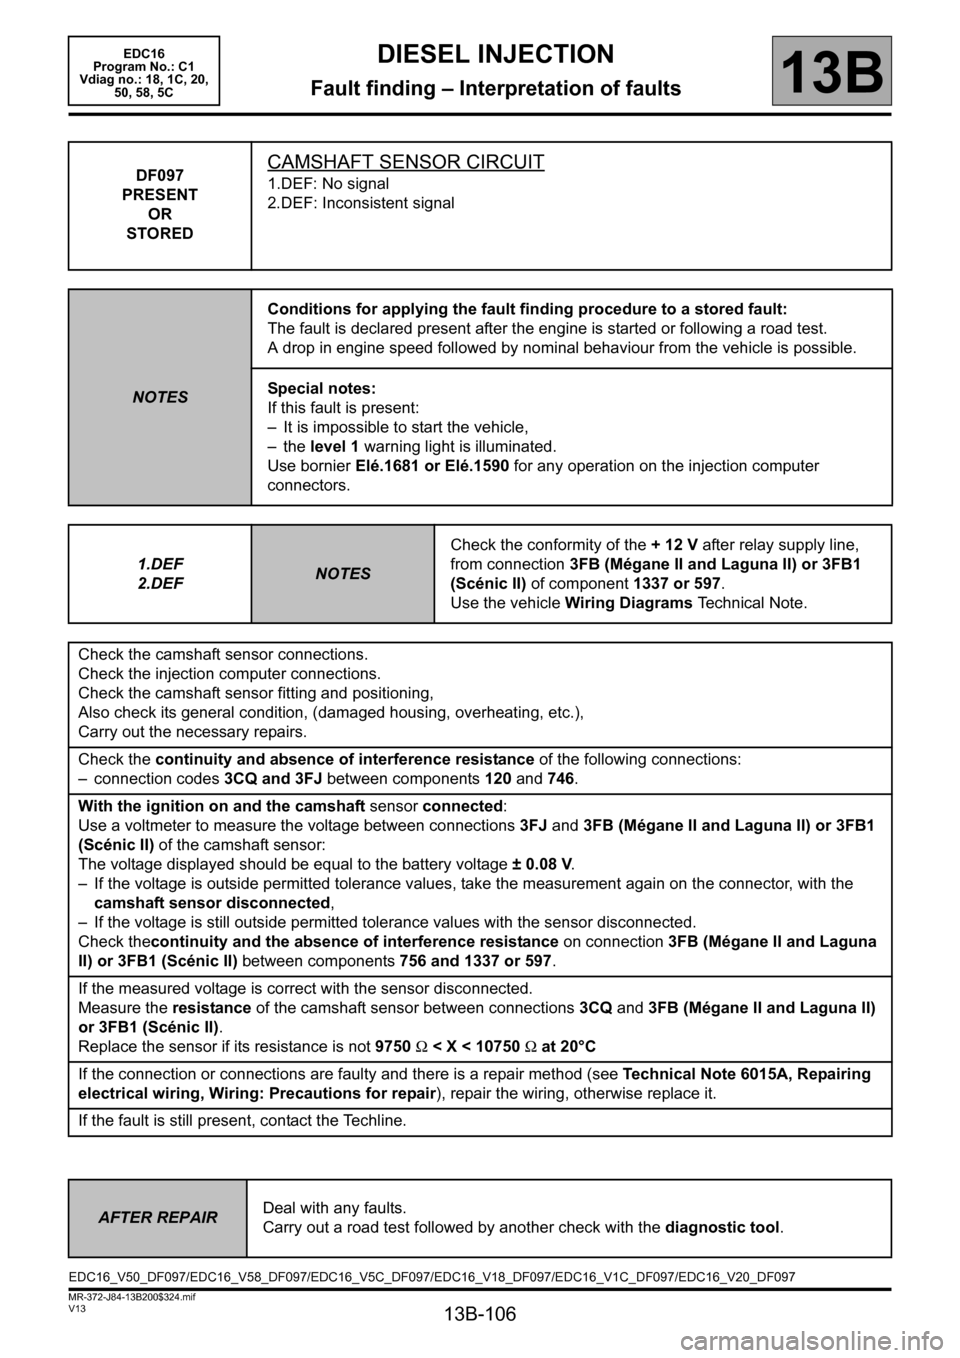 RENAULT SCENIC 2011 J95 / 3.G Engine And Peripherals EDC16 Workshop Manual 13B-106
MR-372-J84-13B200$324.mif
V13
DIESEL INJECTION
Fault finding – Interpretation of faults
EDC16  
Program No.: C1 
Vdiag no.: 18, 1C, 20,  
50, 58, 5C
13B
DF097
PRESENT
OR
STOREDCAMSHAFT SENSO